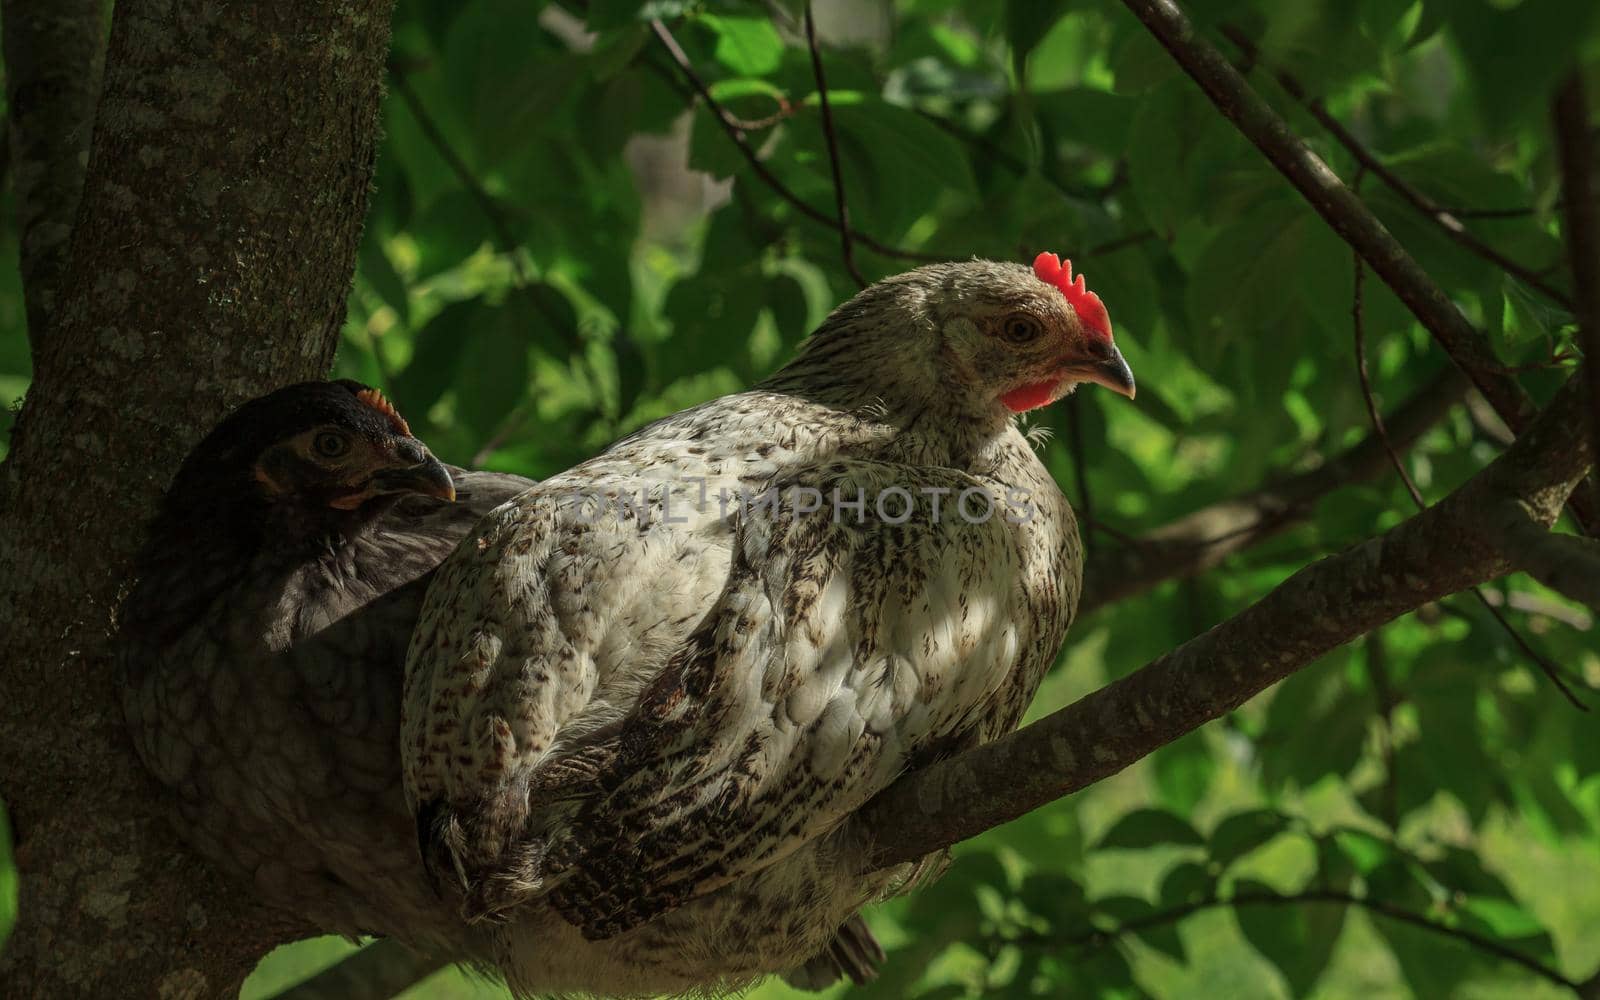 Two variegated wild farm chicken birds sitting on tree